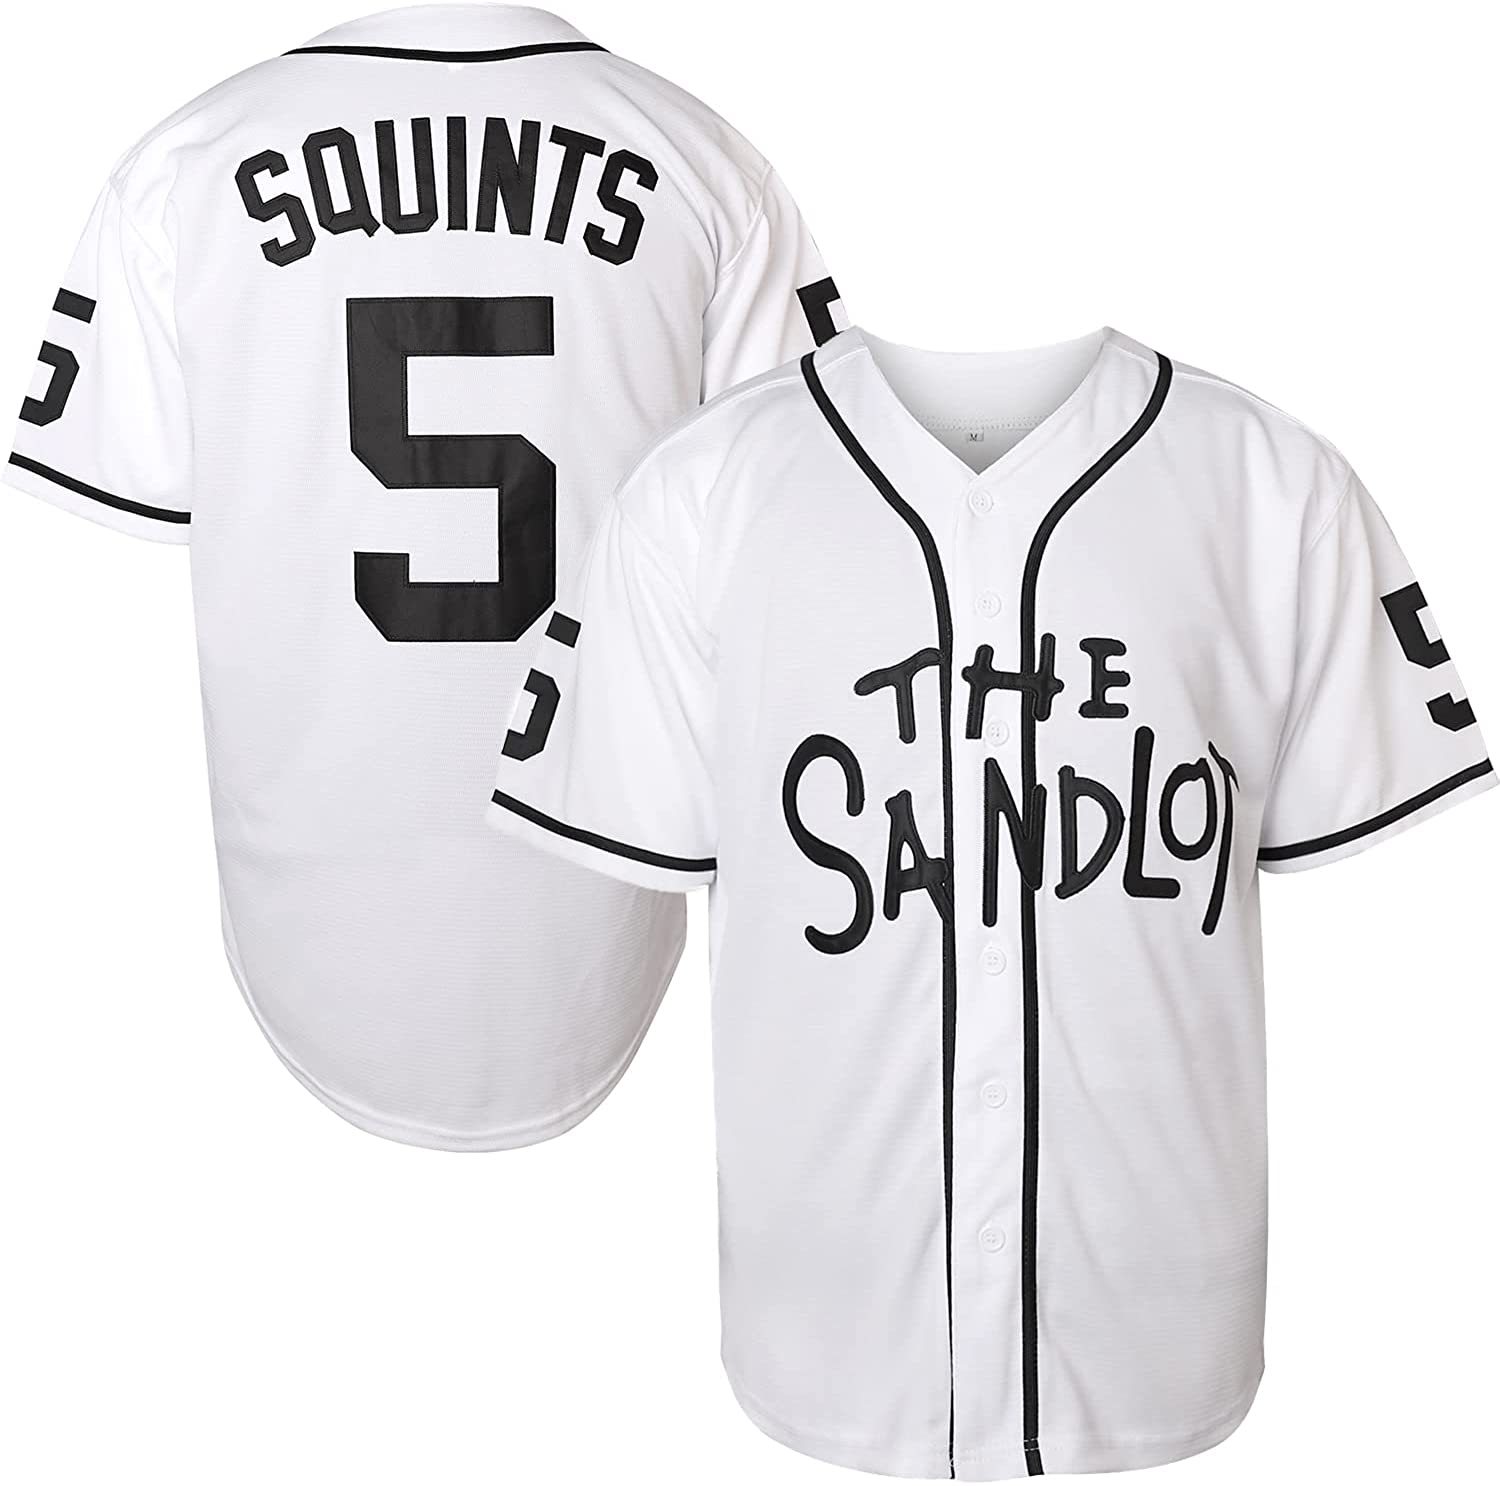 Michael 'Squints' Palledorous #5 The Sandlot Movie Baseball Jersey New White